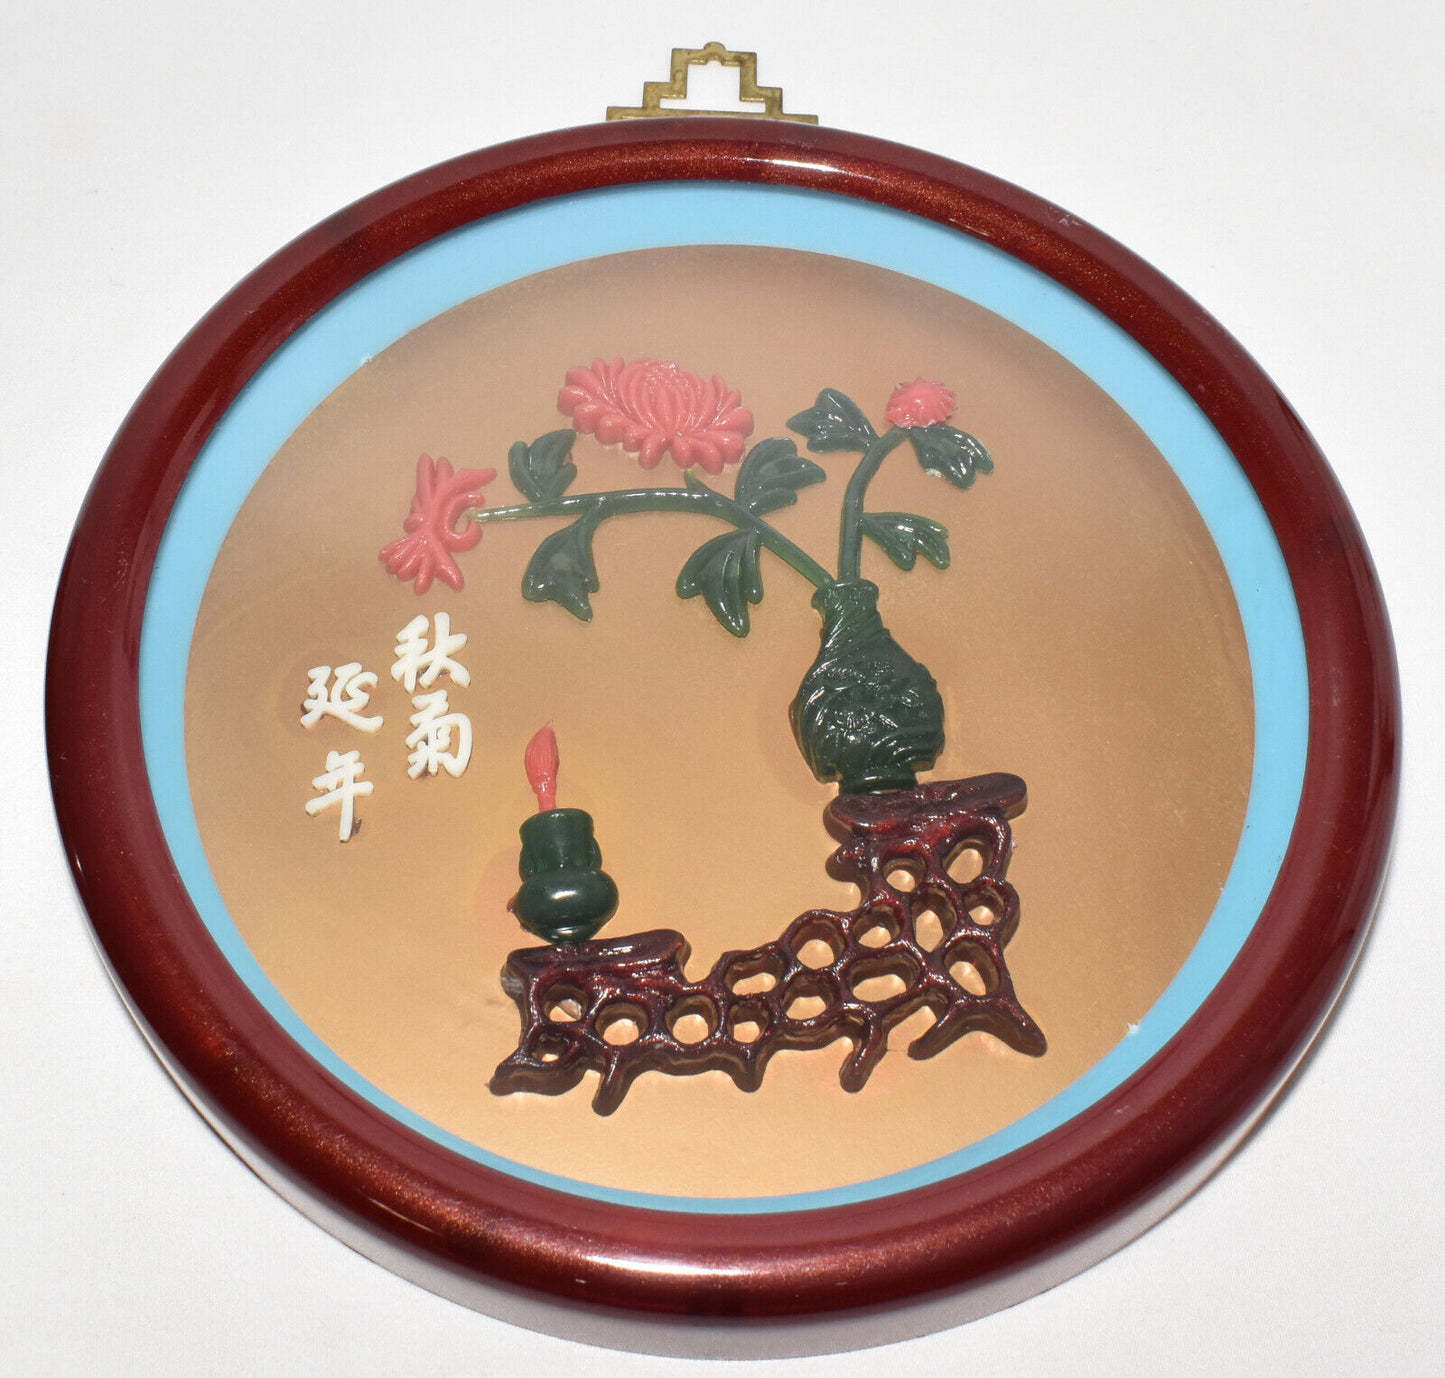 Vintage Chinese 4pc Shadow Box Wall Decor Sculpted Imitation Jade Coral Floral Motif